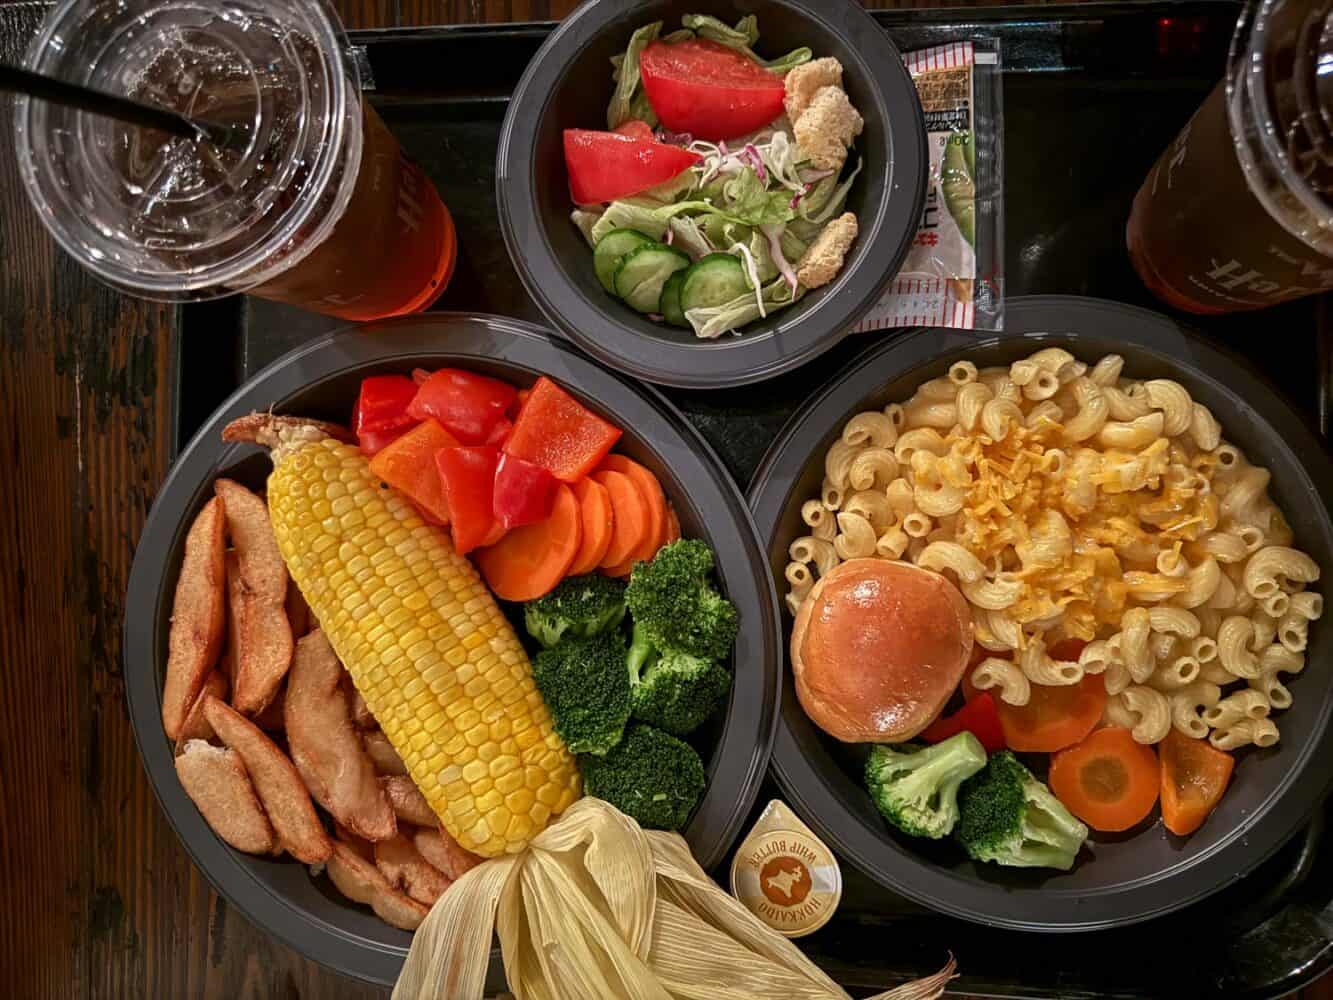 Vegetarian plate and kids macaroni and cheese at Three Broomsticks restaurant in Universal Studios Japan